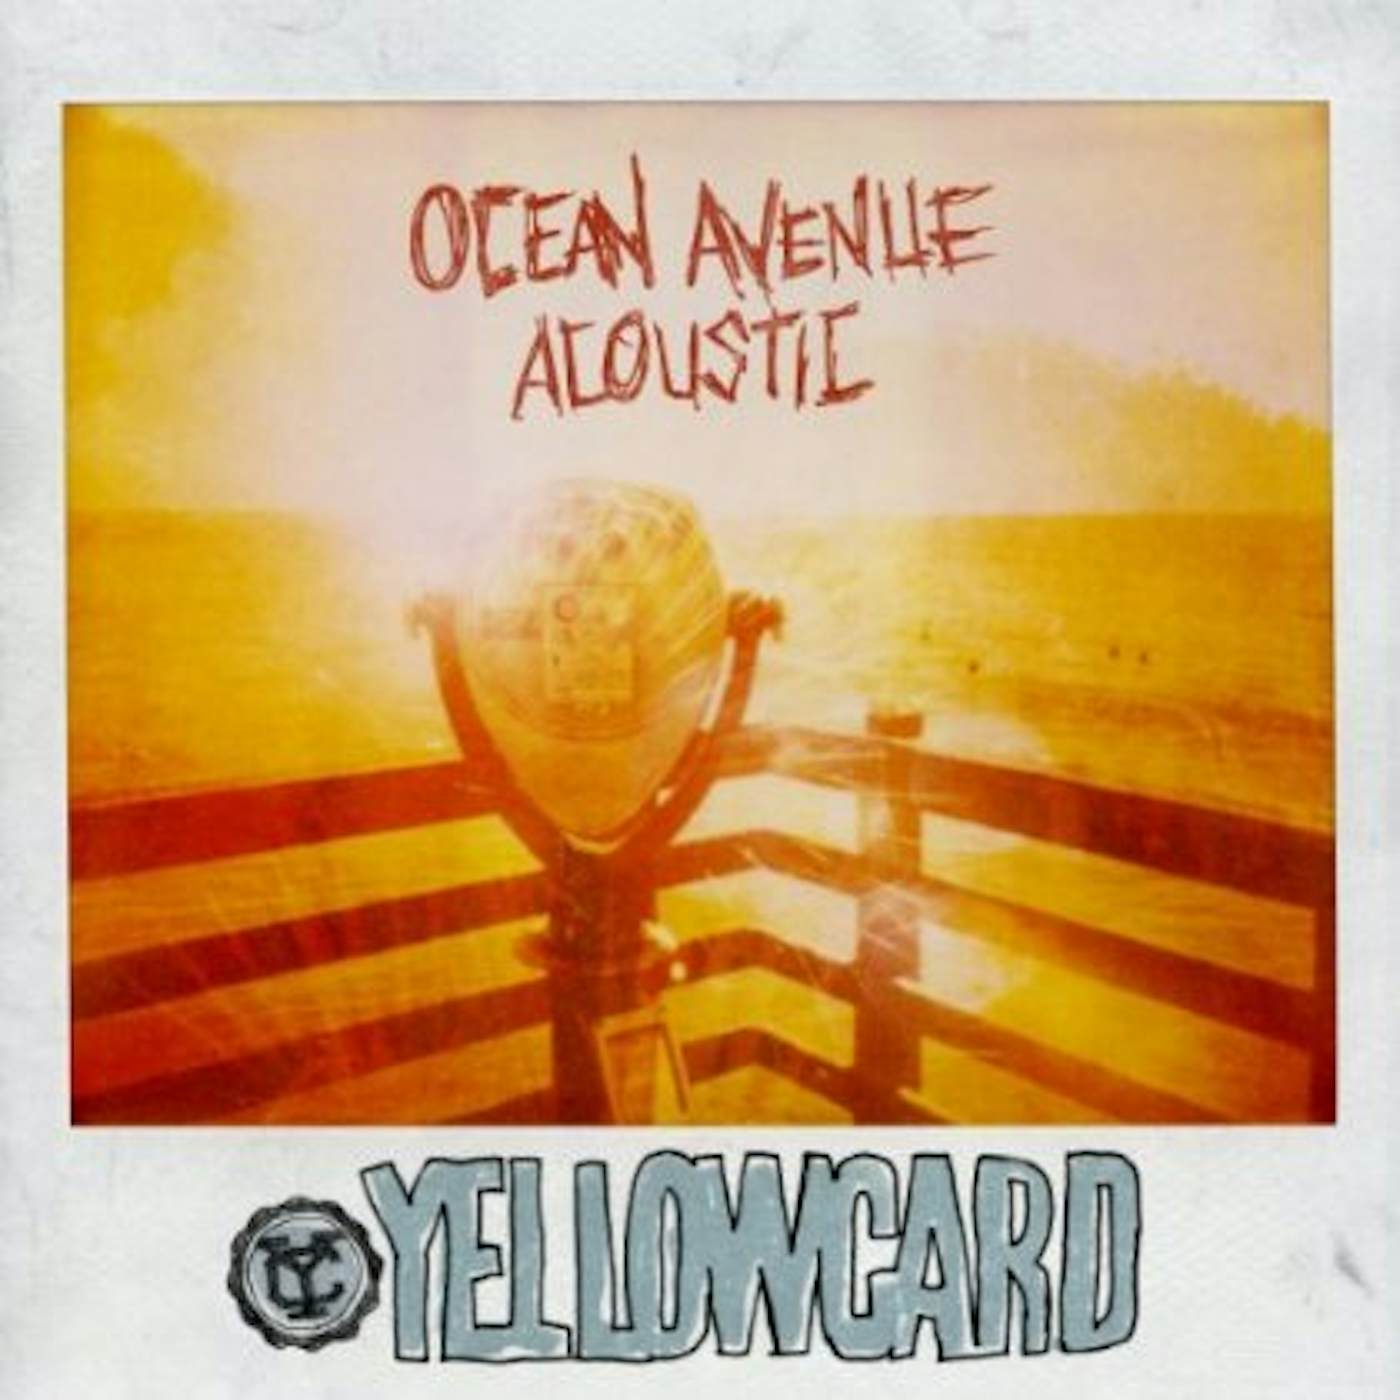 Yellowcard OCEAN AVENUE ACOUSTIC CD